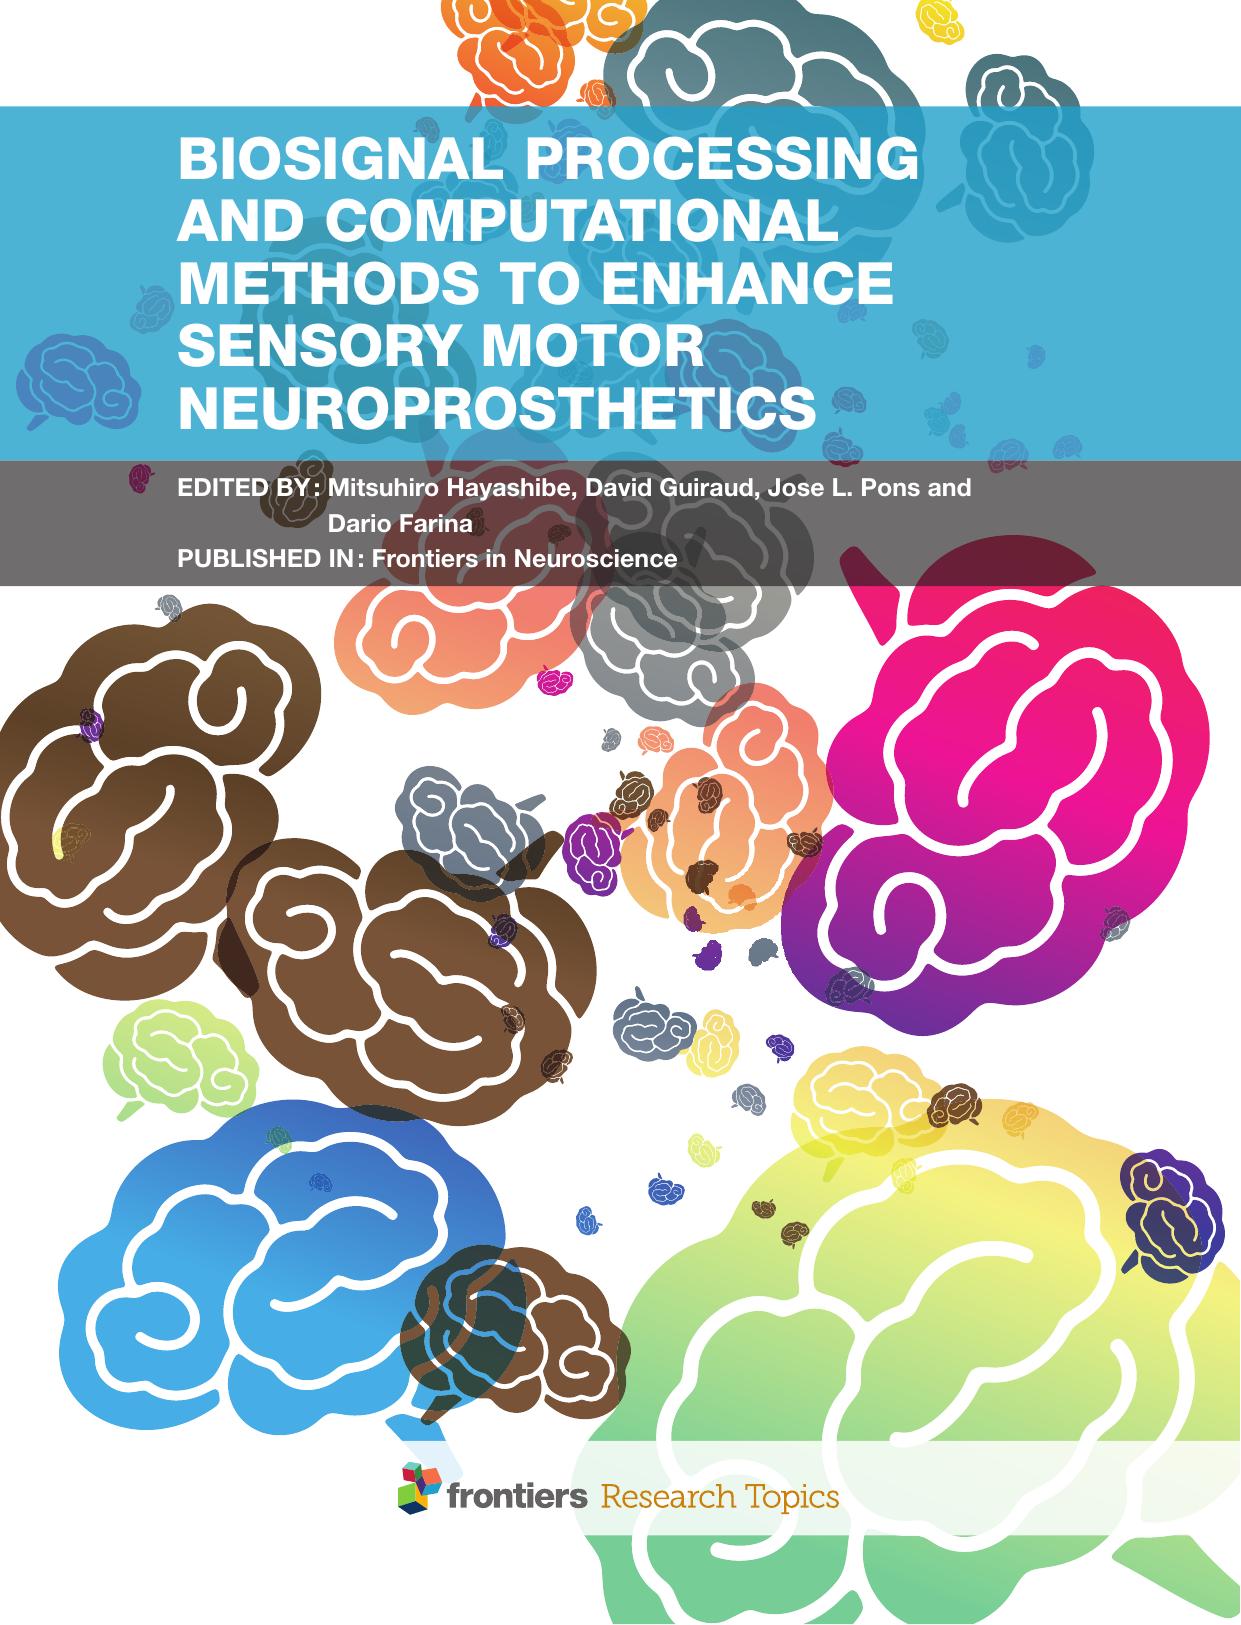 Biosignal processing and computational methods to enhance sensory motor neuroprosthetics